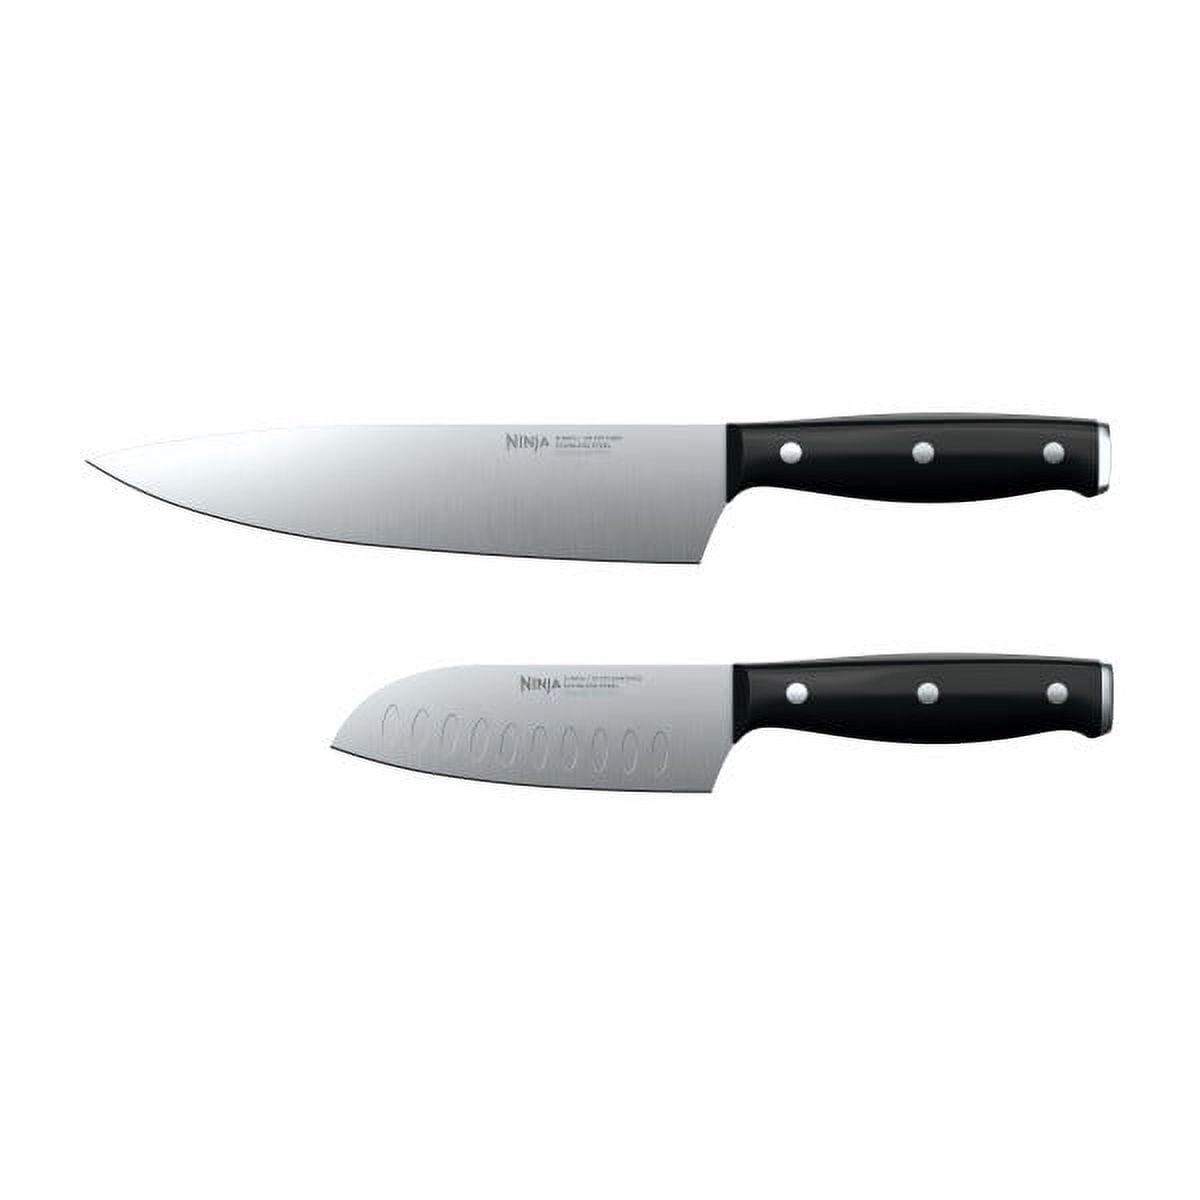 Ninja™ Foodi™ NeverDull™ 11-Piece Essential Knife System with